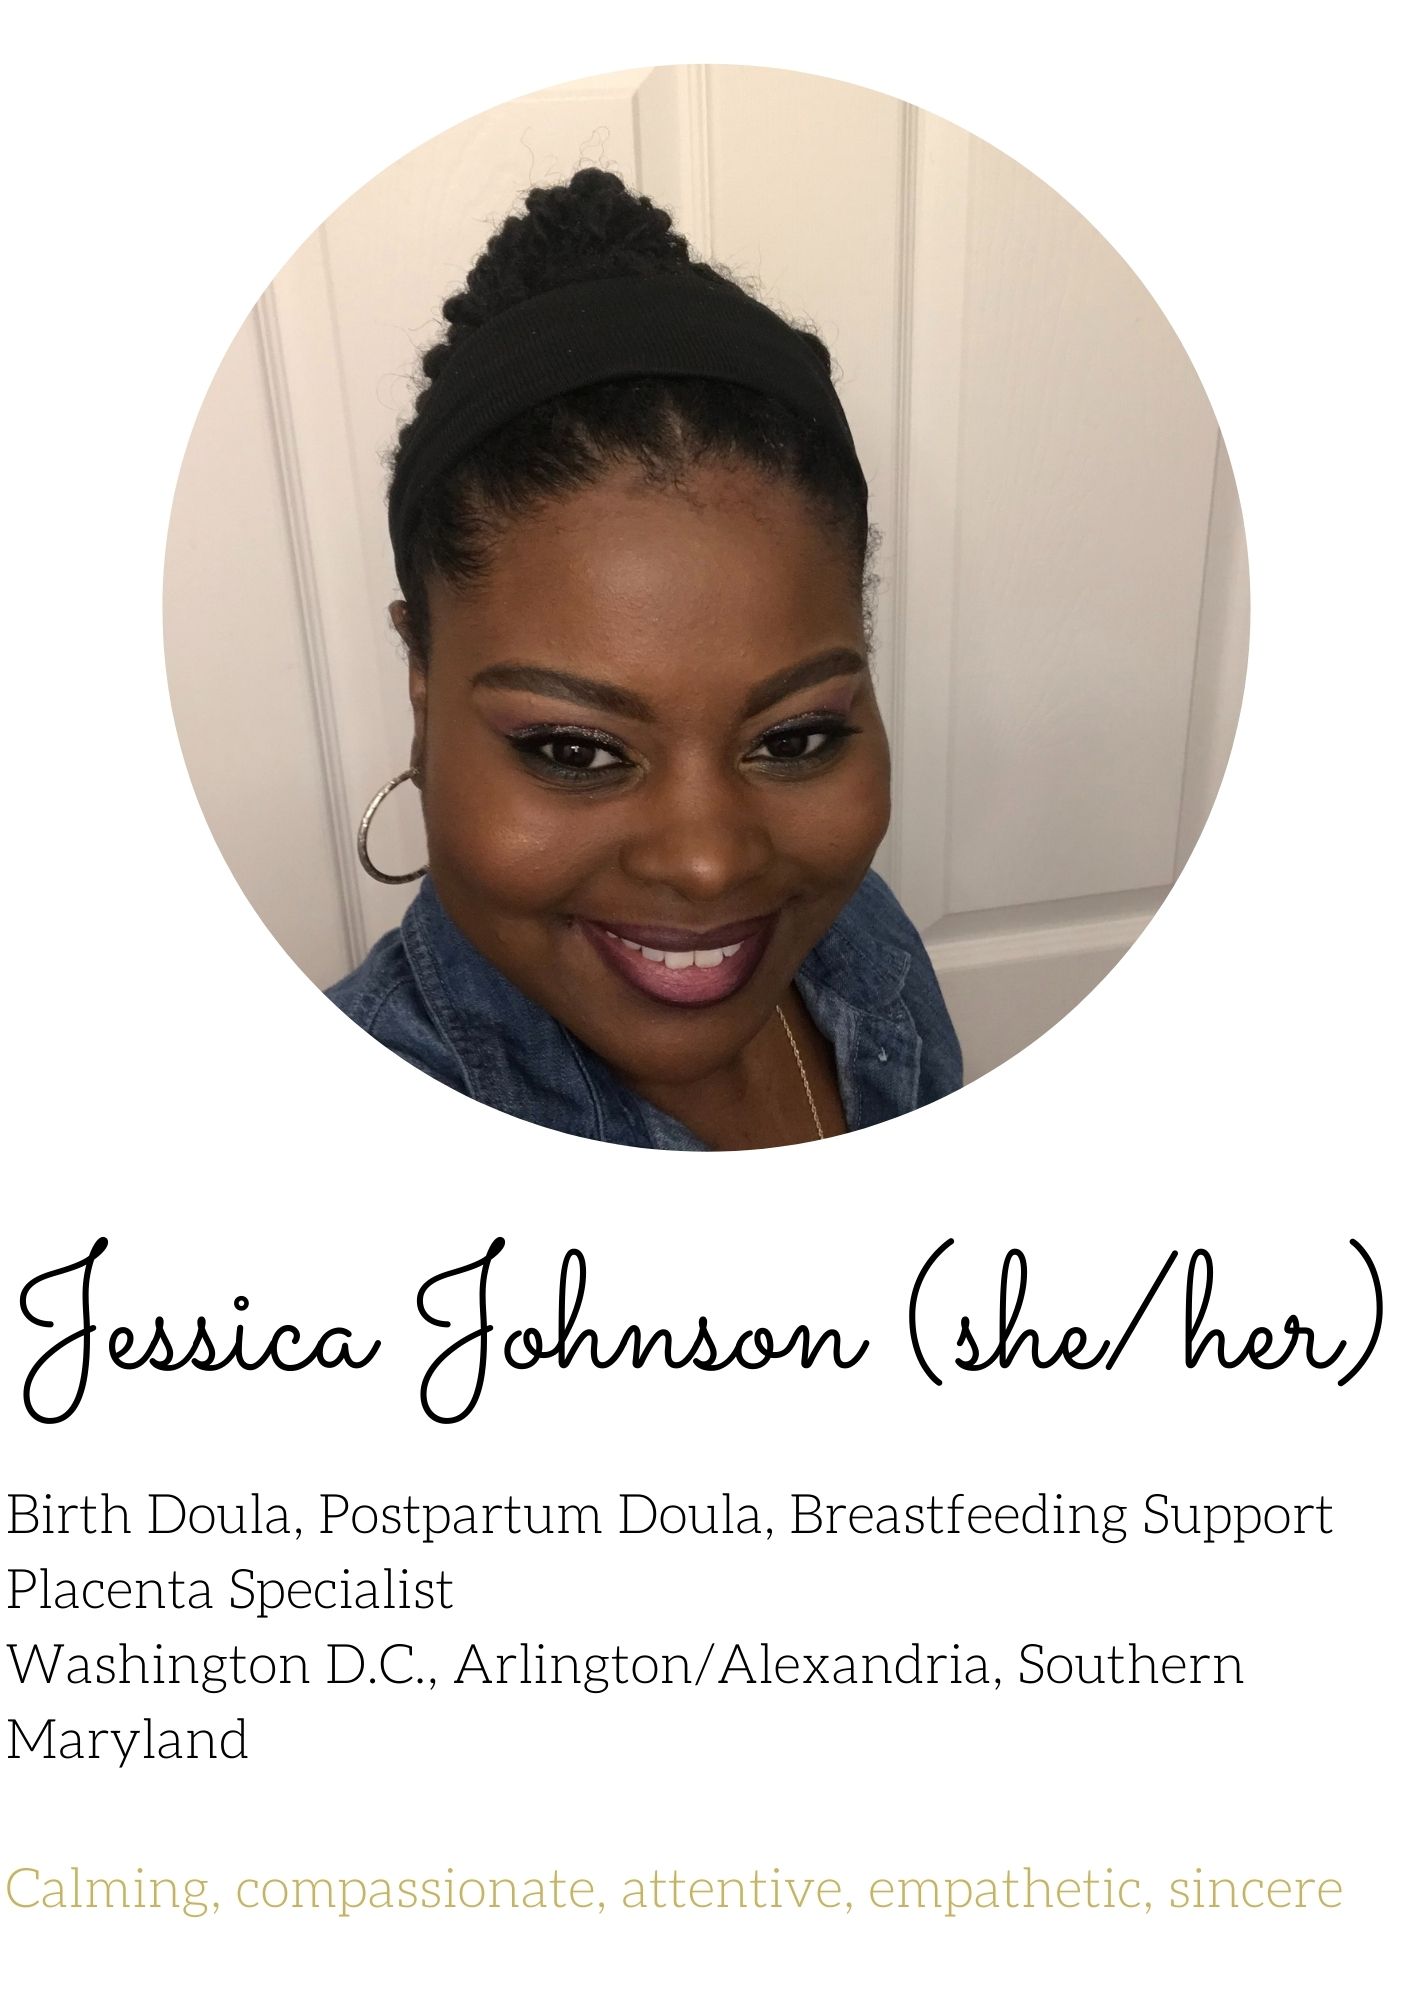 Jessica Johnson Birth Doula, Postpartum Doula, Breastfeeding Support Placenta Specialist Washington D.C., Arlington/Alexandria, Southern Maryland   Calming, compassionate, attentive, empathetic, sincere